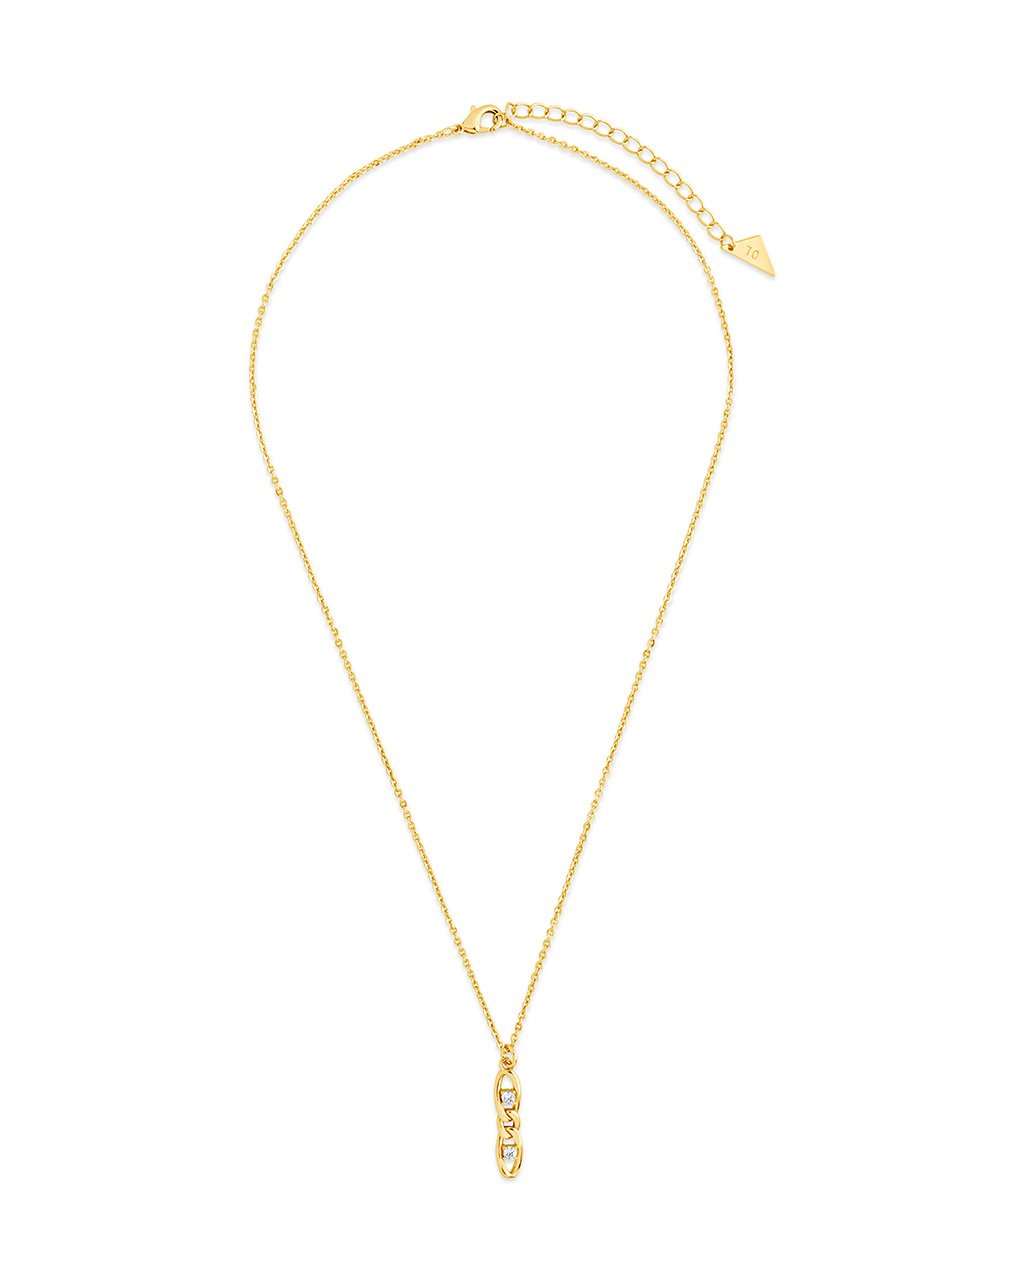 CZ Studded Figaro Link Pendant Necklace Necklace Sterling Forever 